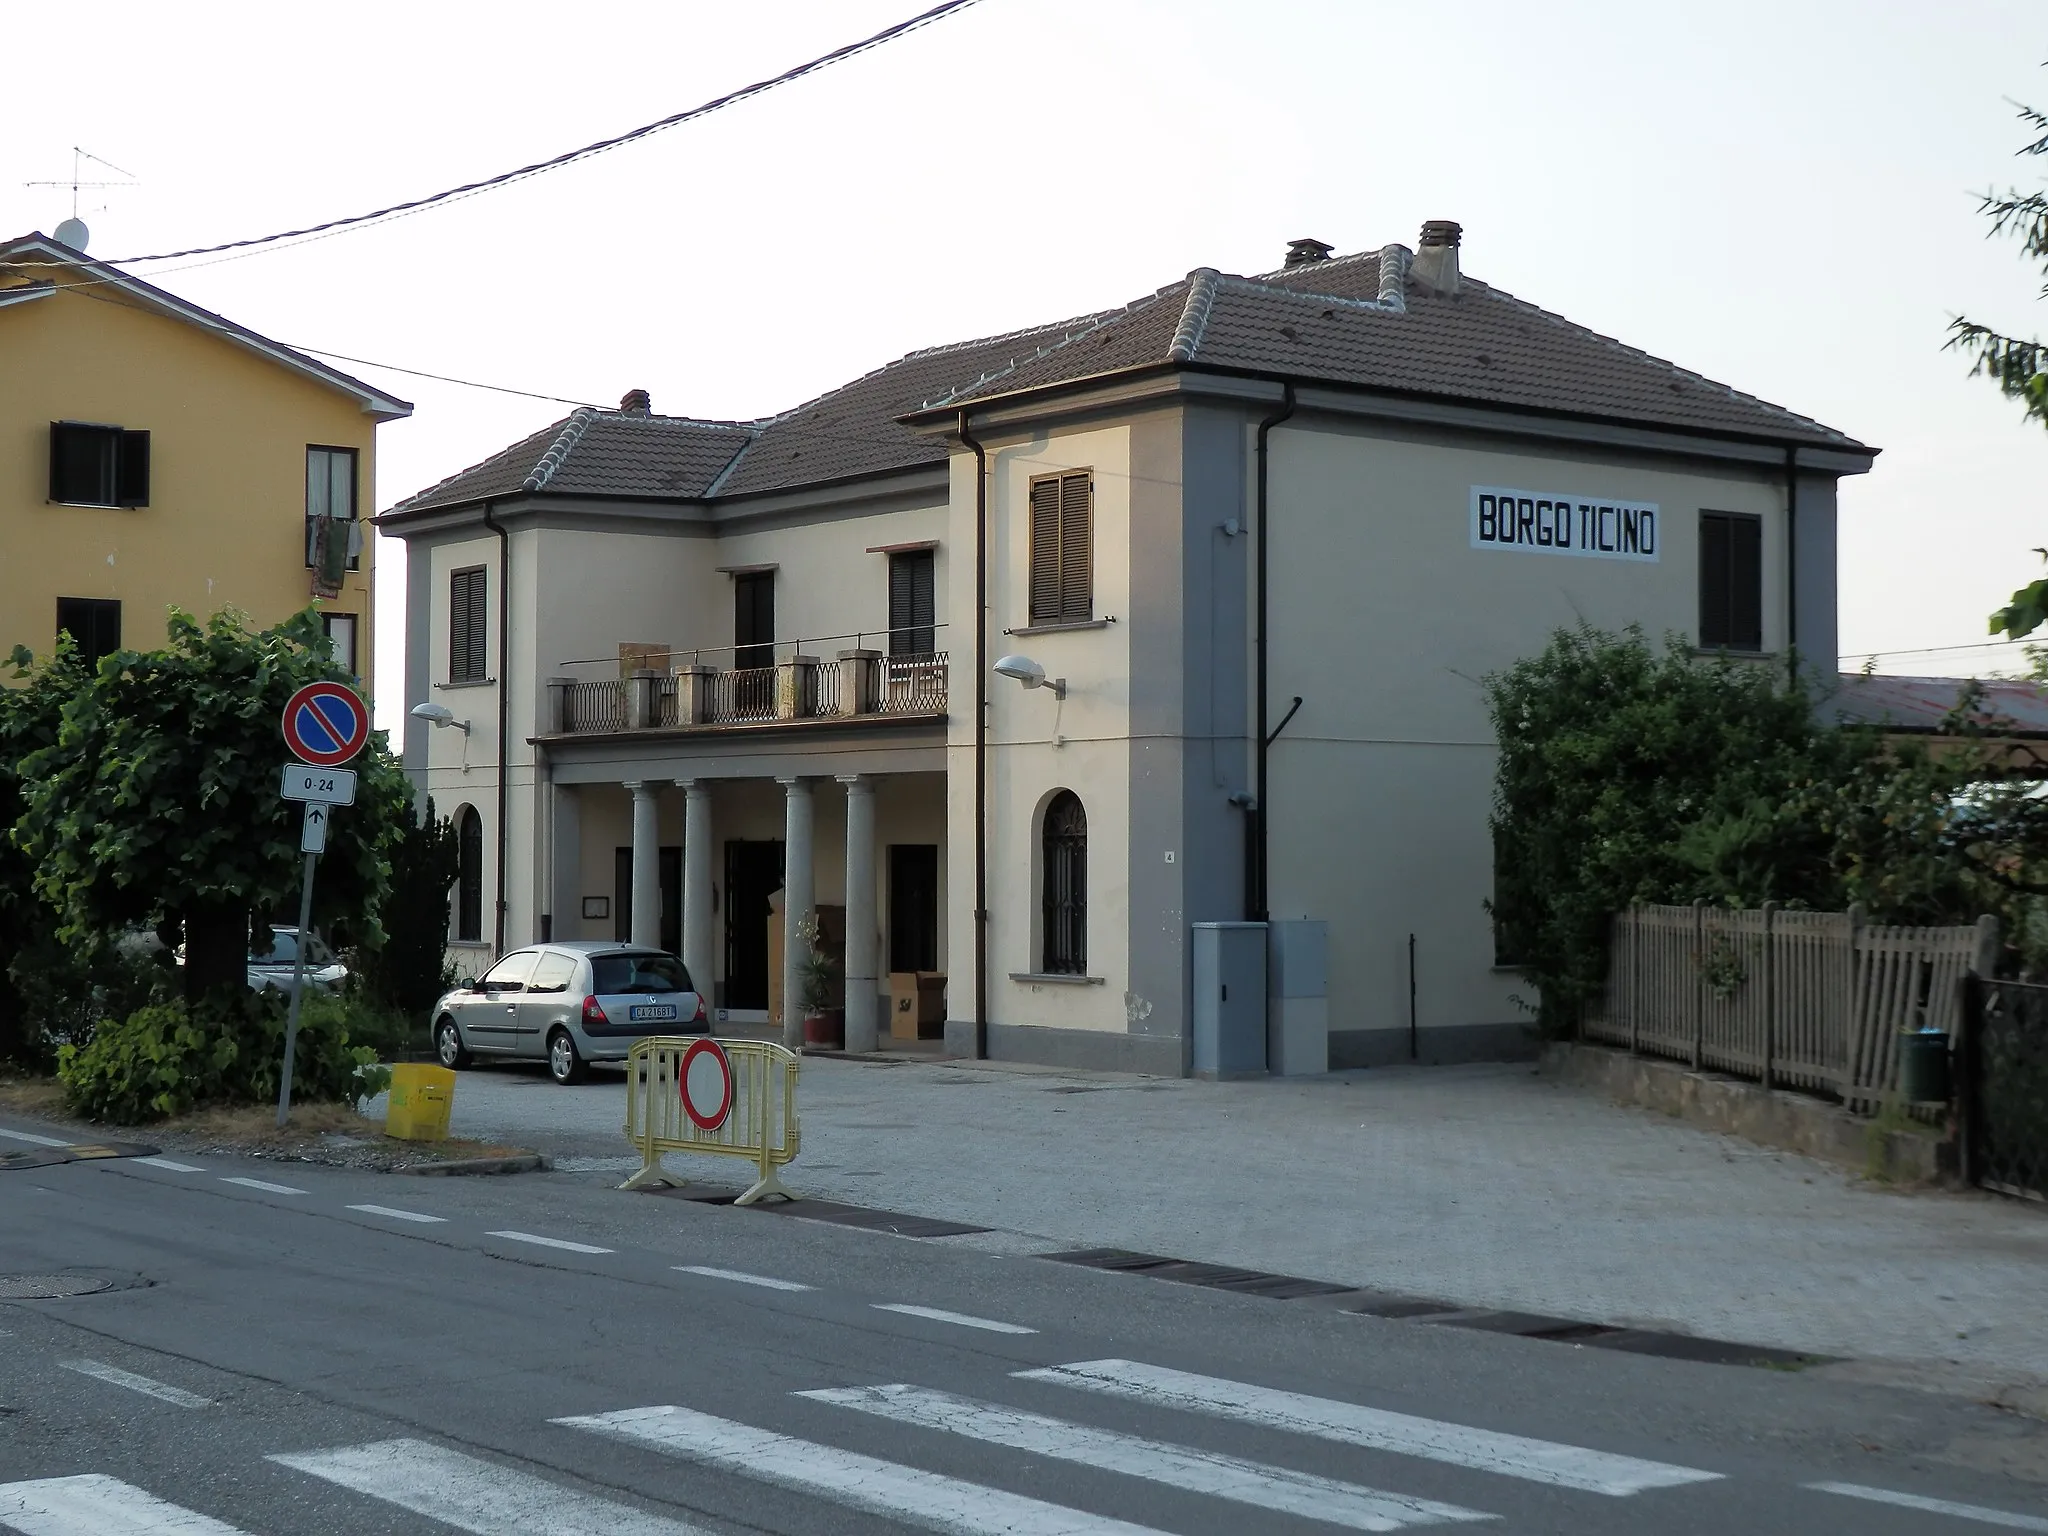 Photo showing: Train station of Borgo Ticino.